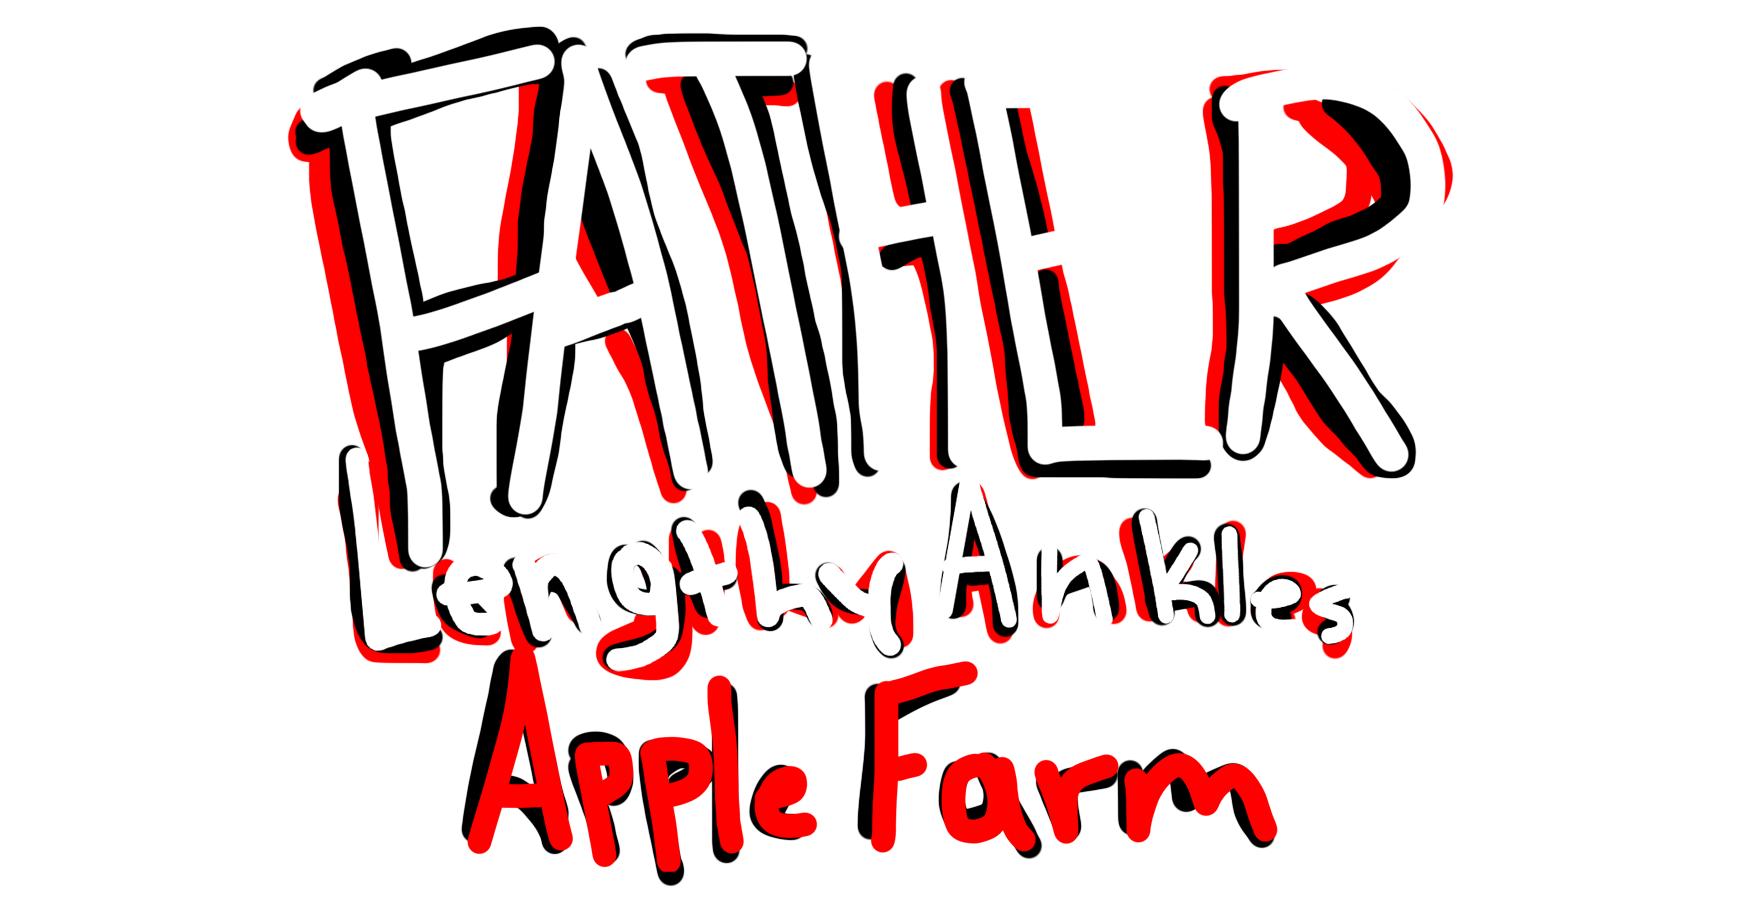 Father Lengthy Ankles Apple Farm